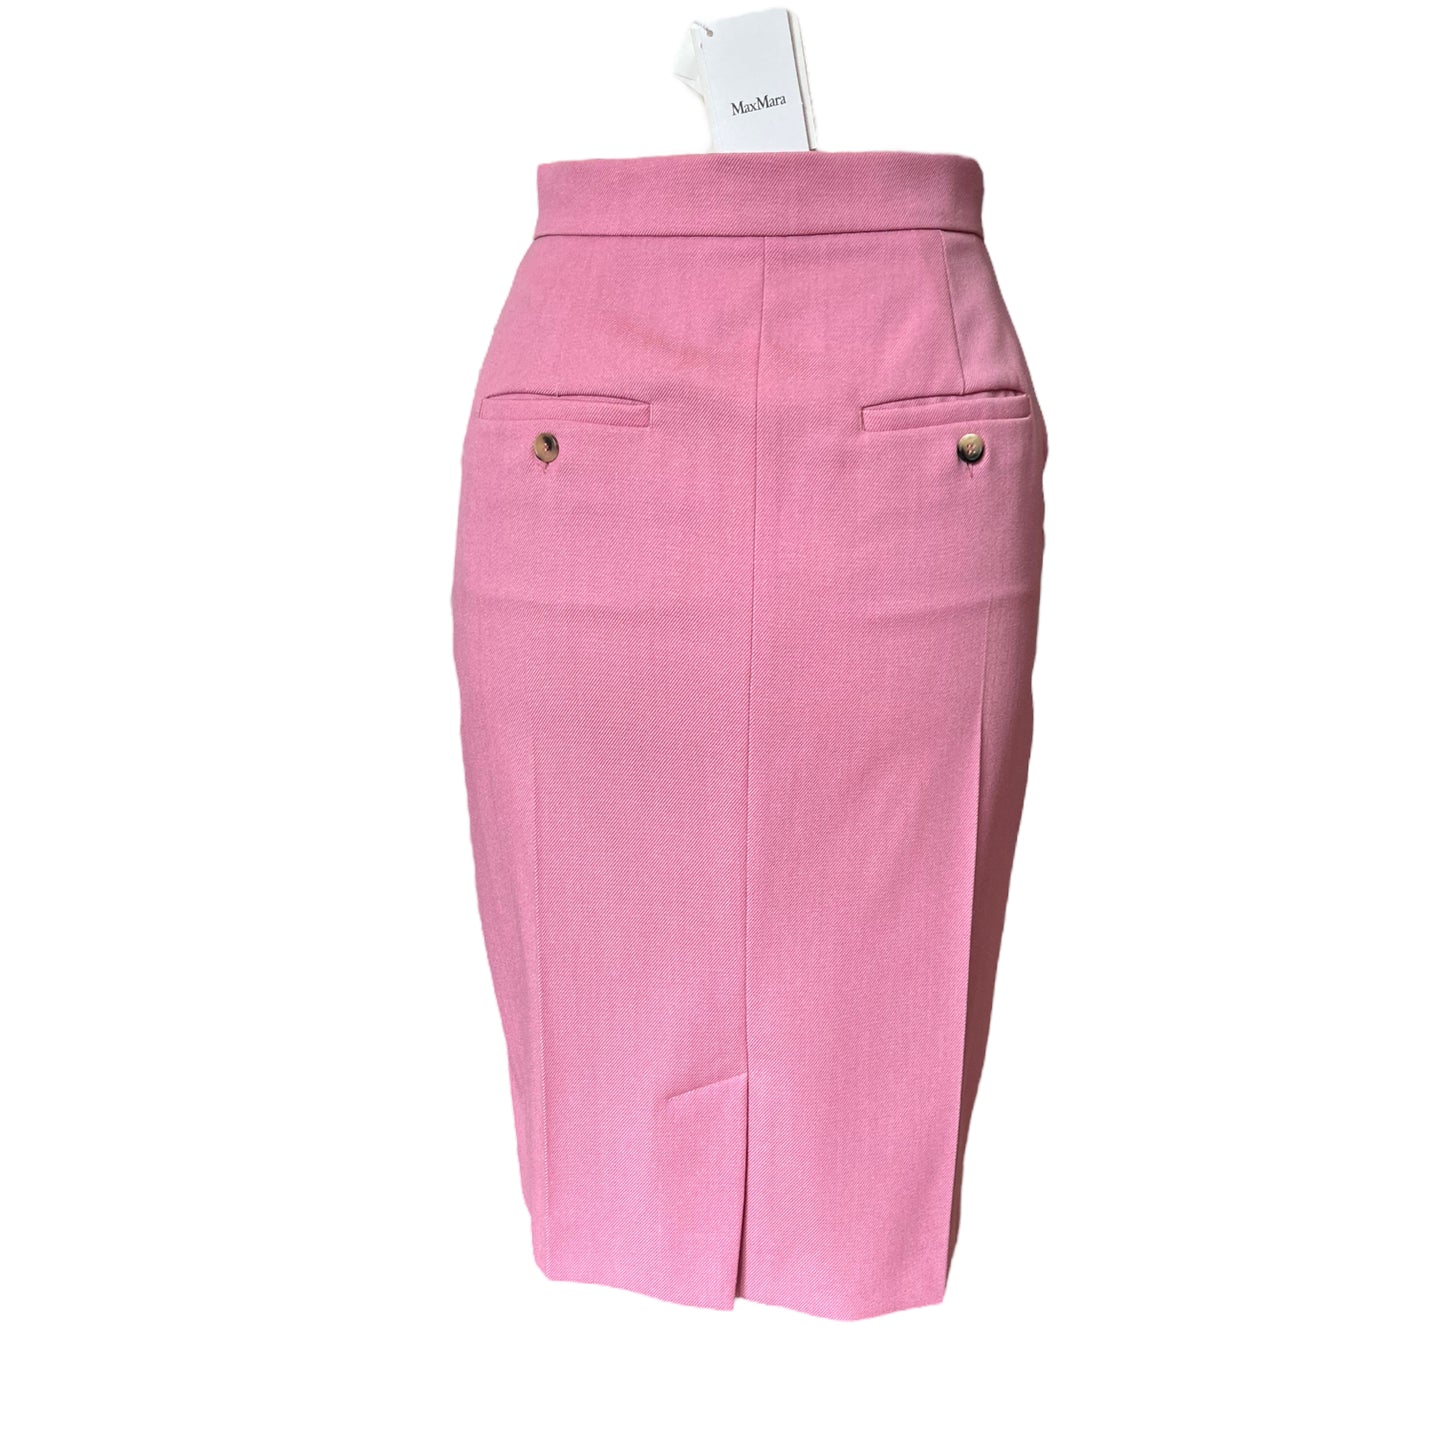 NEW Max Mara Pink Skirt